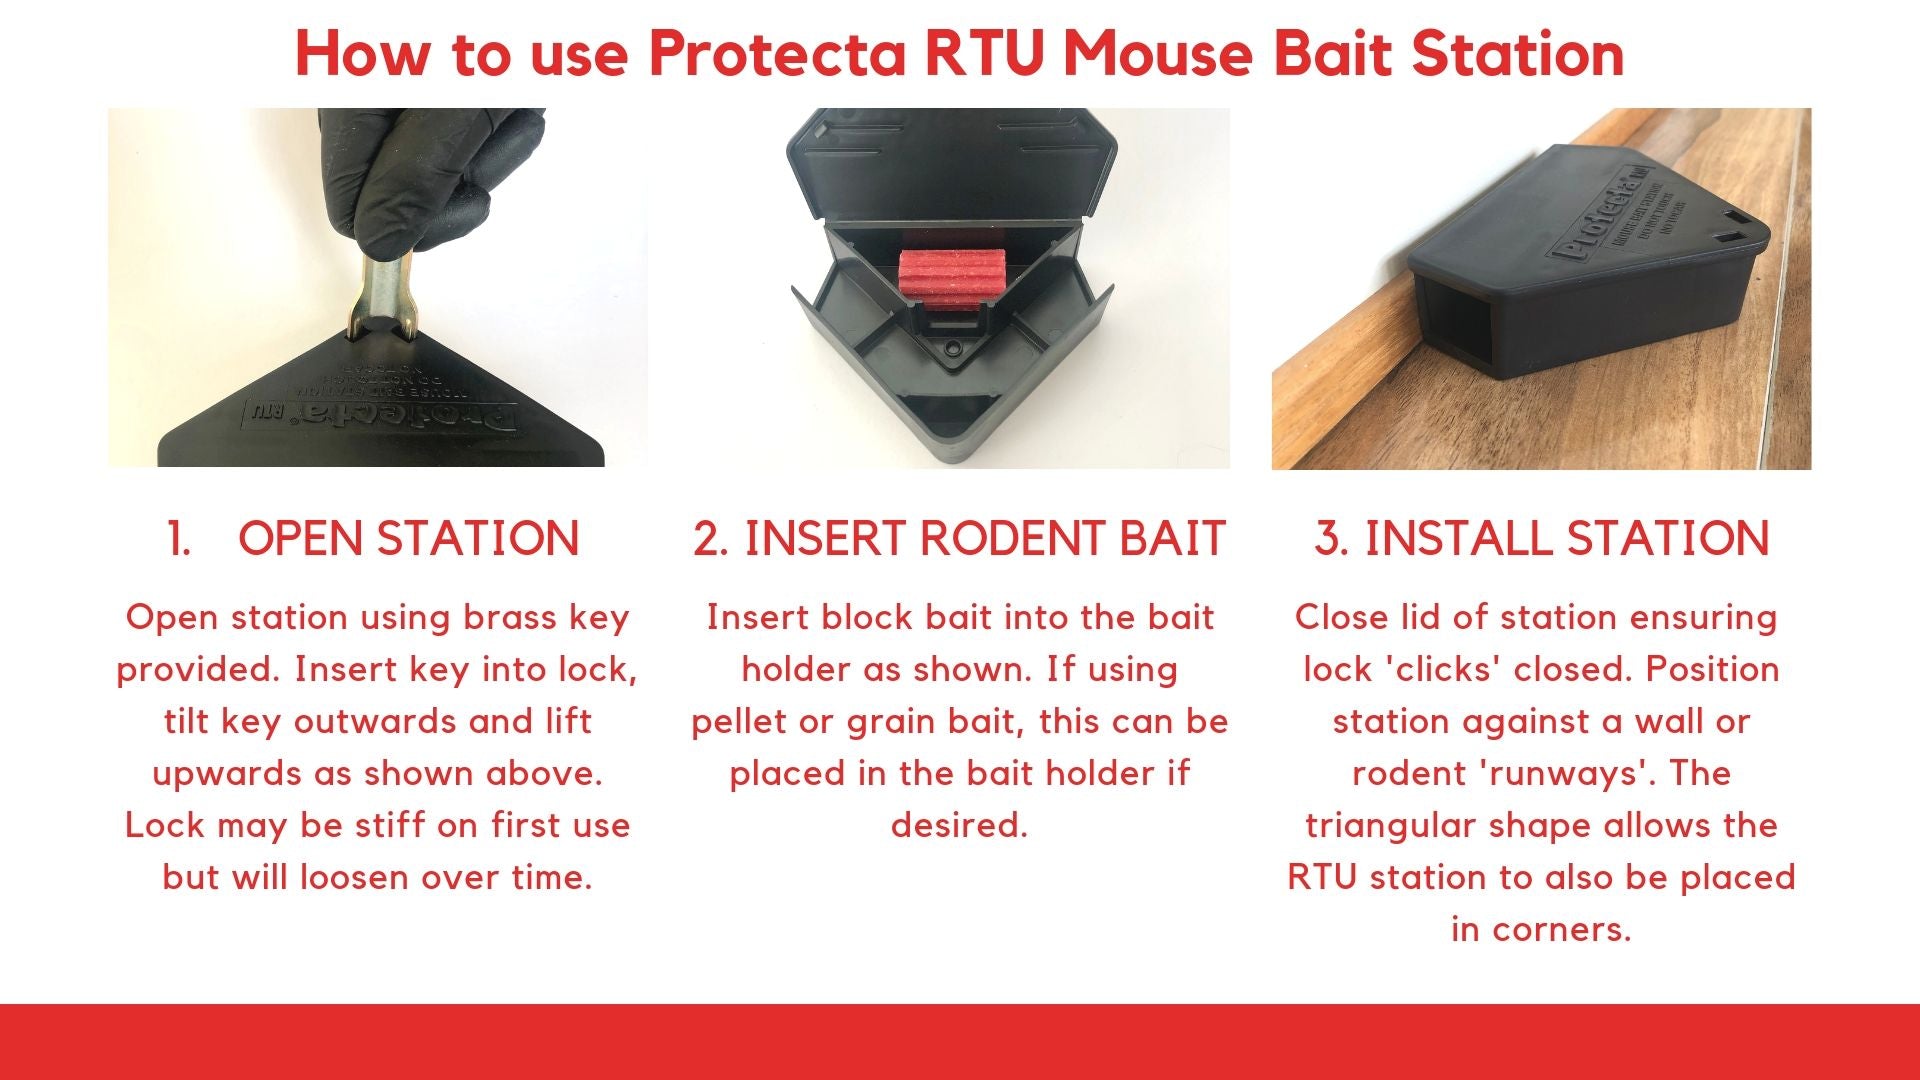 Protecta RTU, Mouse Bait Station, Keeps Bait Safe